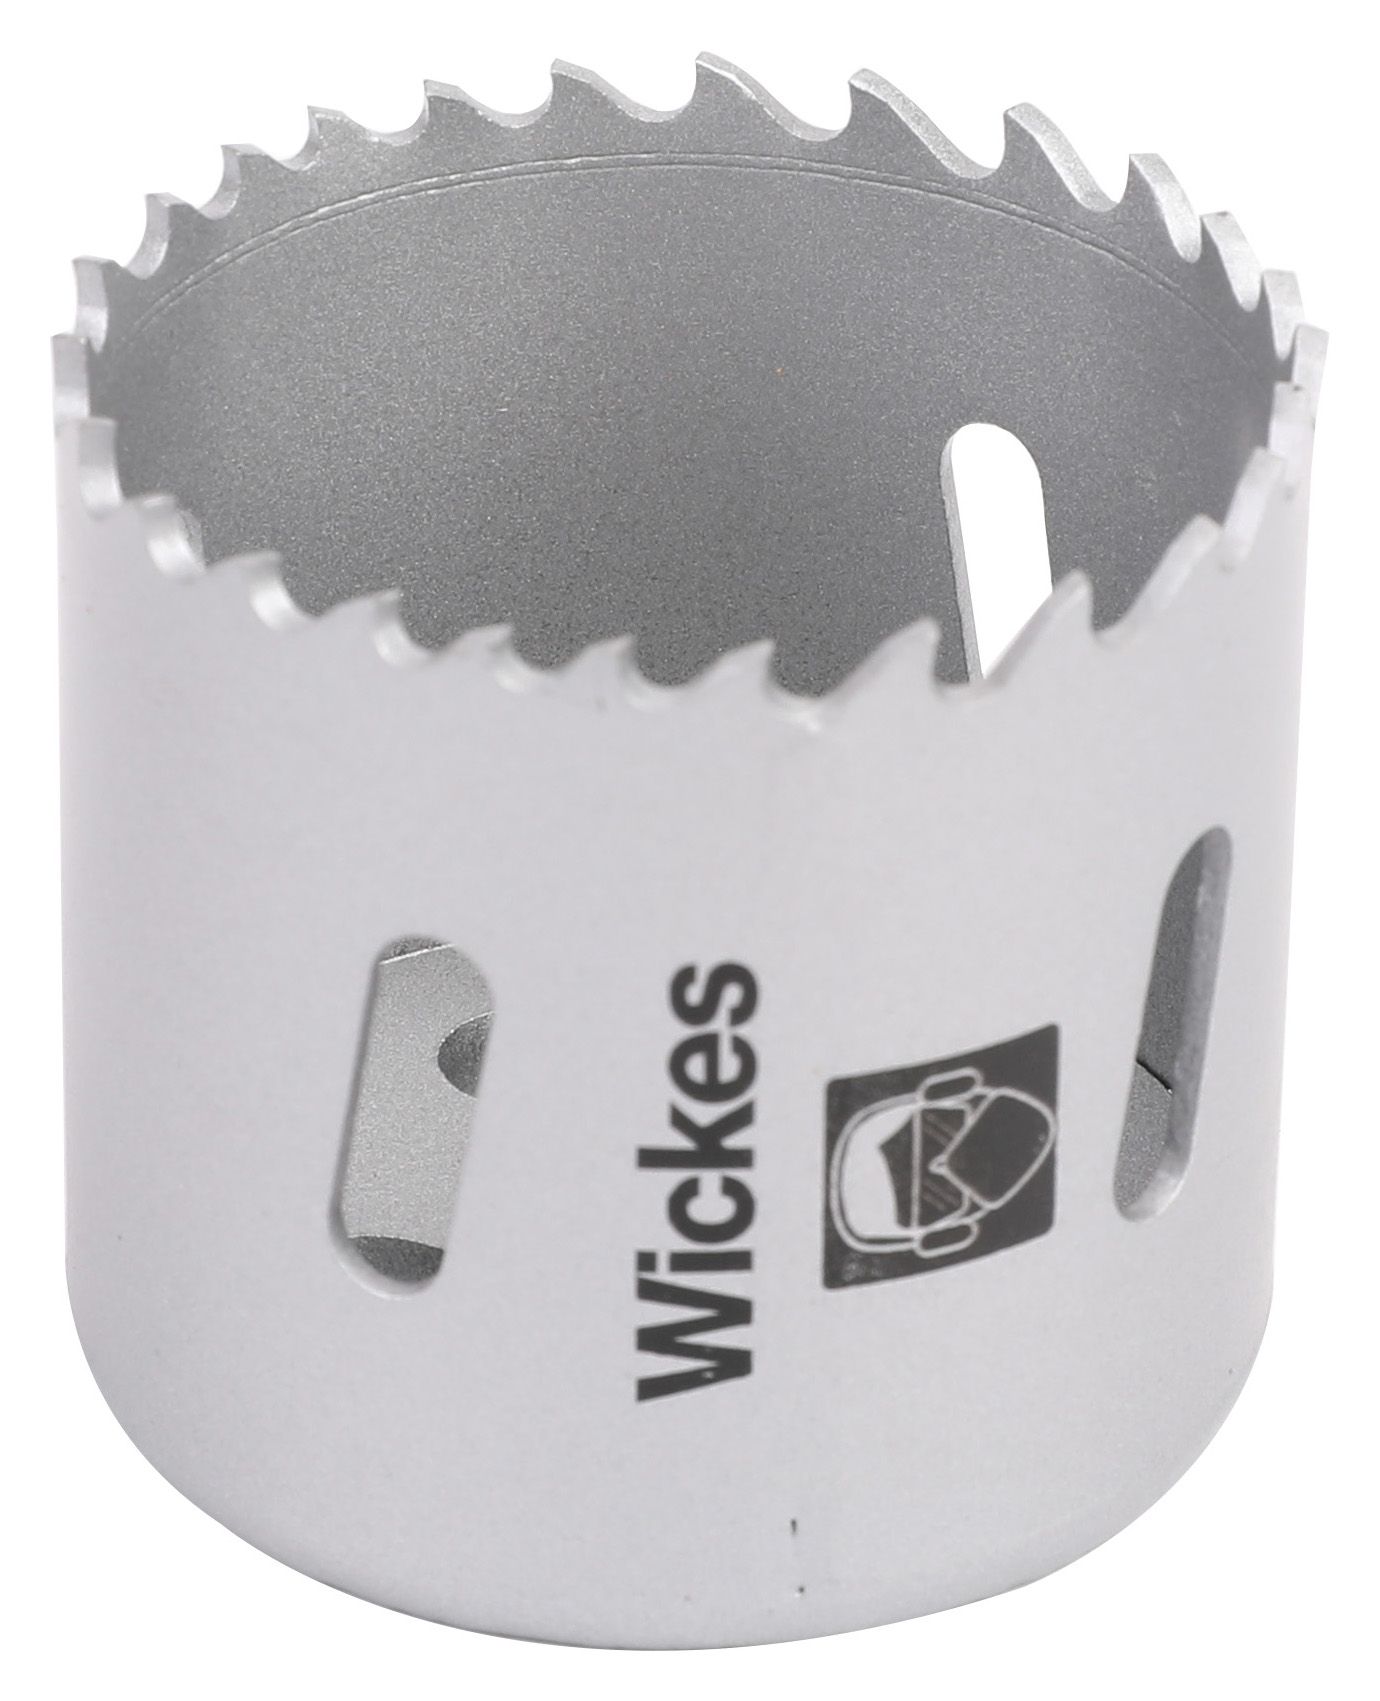 Wickes HSS Bi-metal Hole Saw - 48mm